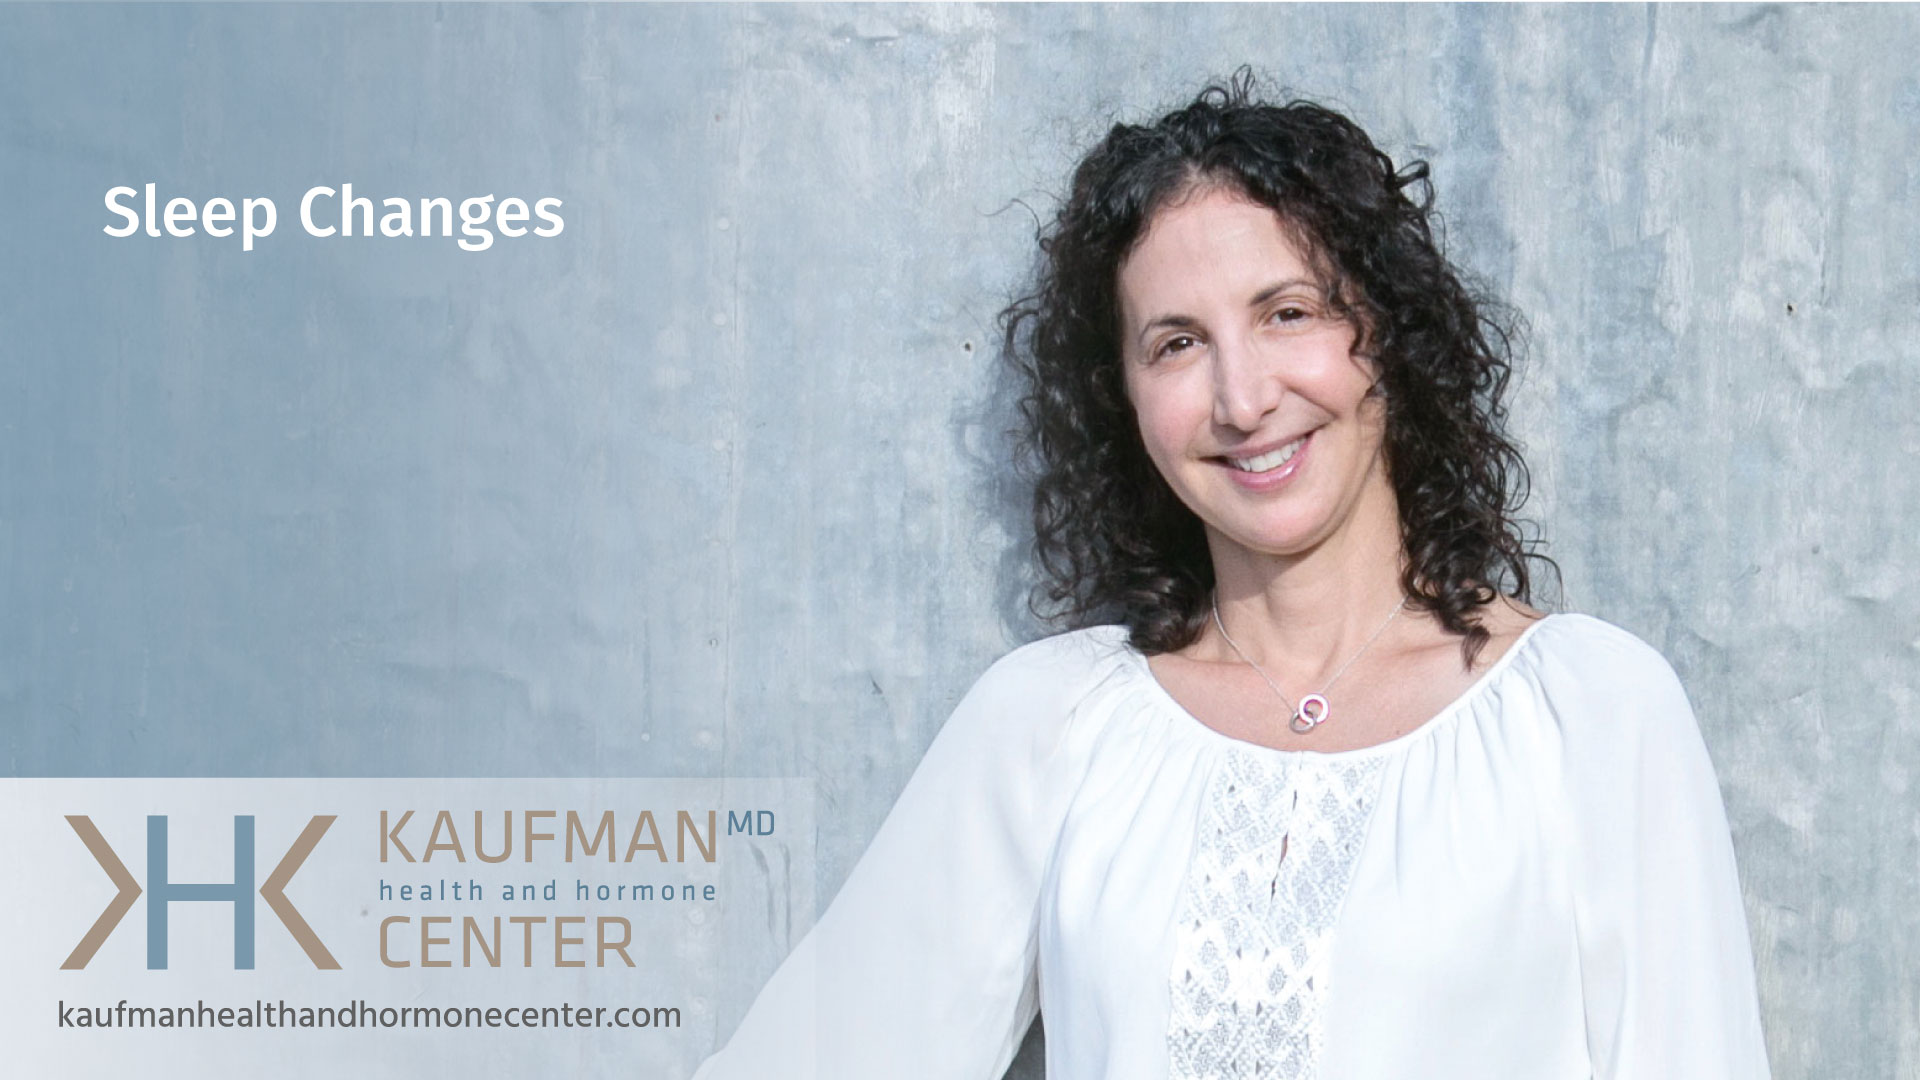 Sleep changes with Karen Kaufman MD